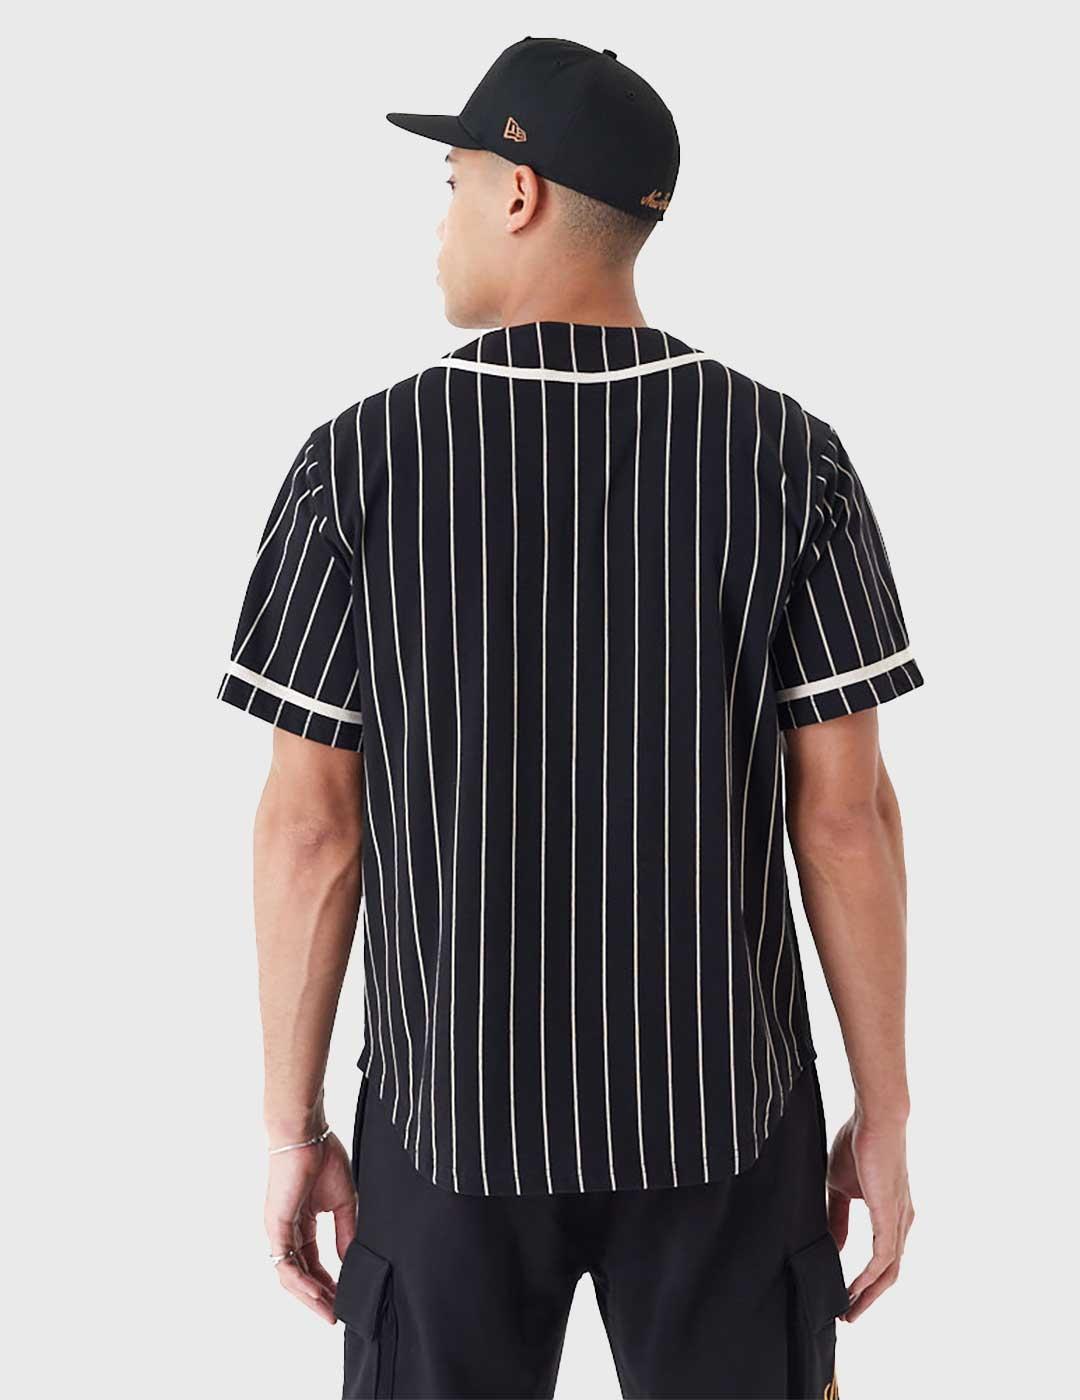 New Era Pinstripe Jersey Camisa negra unisex